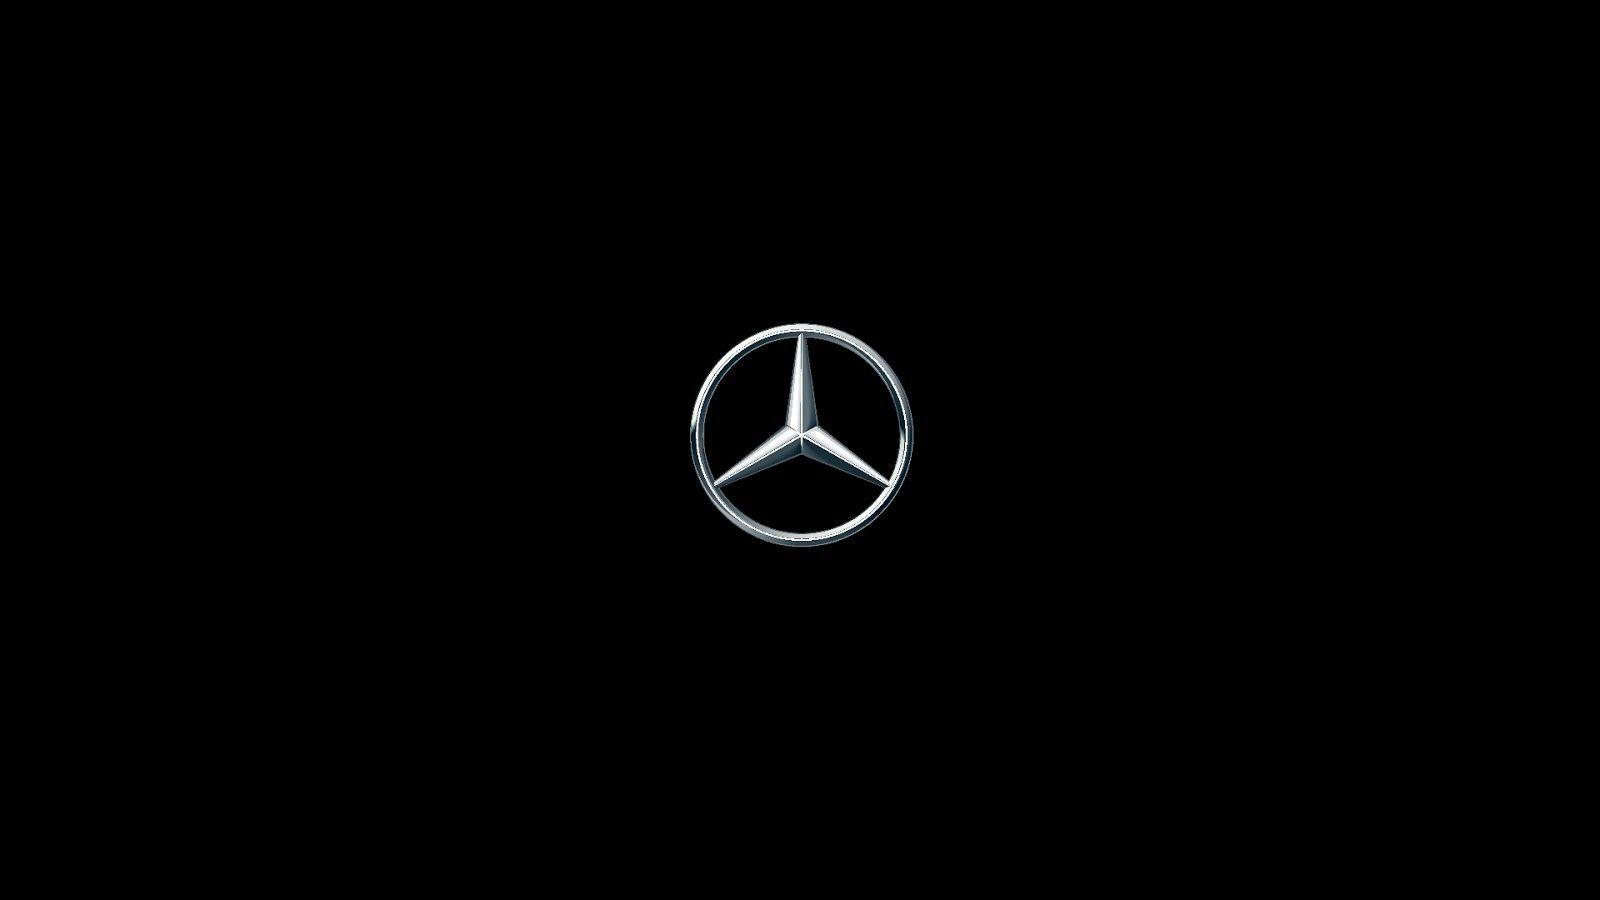 Benz Black Logo - Mercedes Benz logos in black background ~ Mercedes Benz Logos